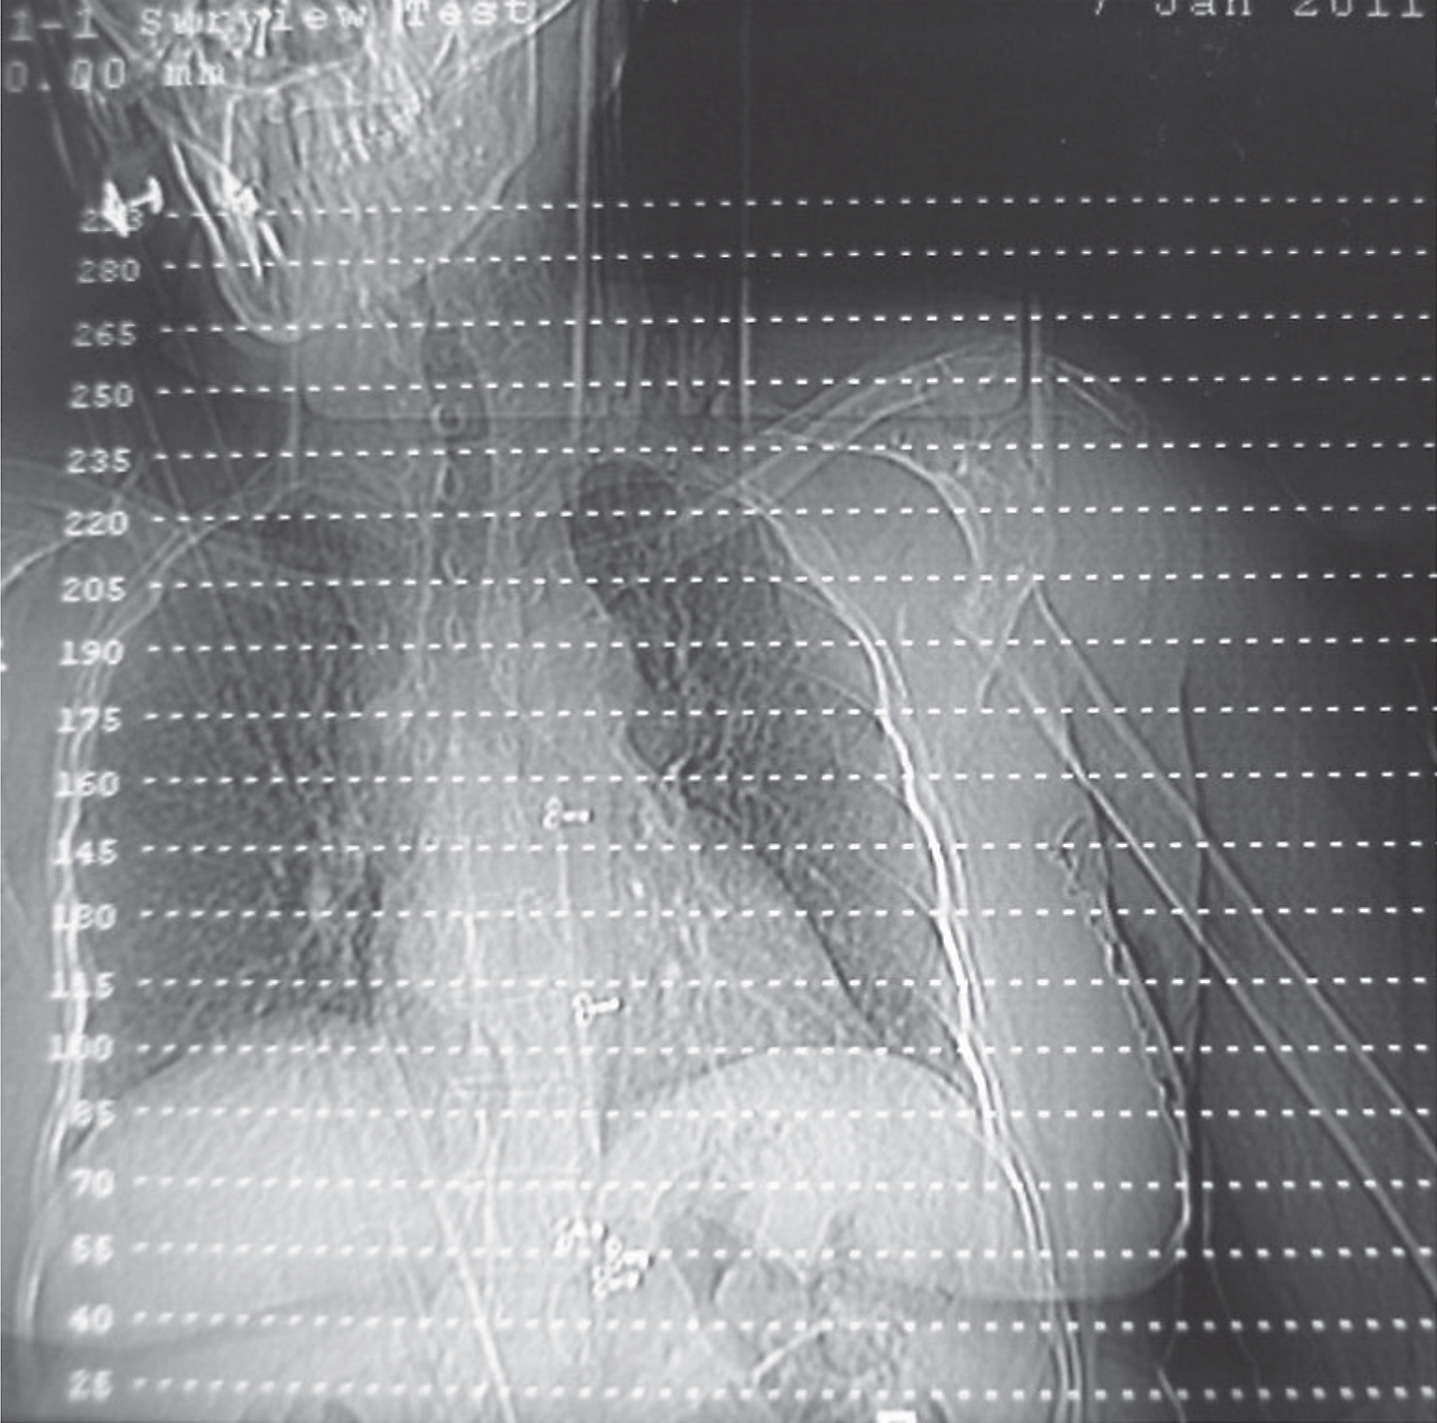 Xray showing bone resorption over the proximal humerus area.